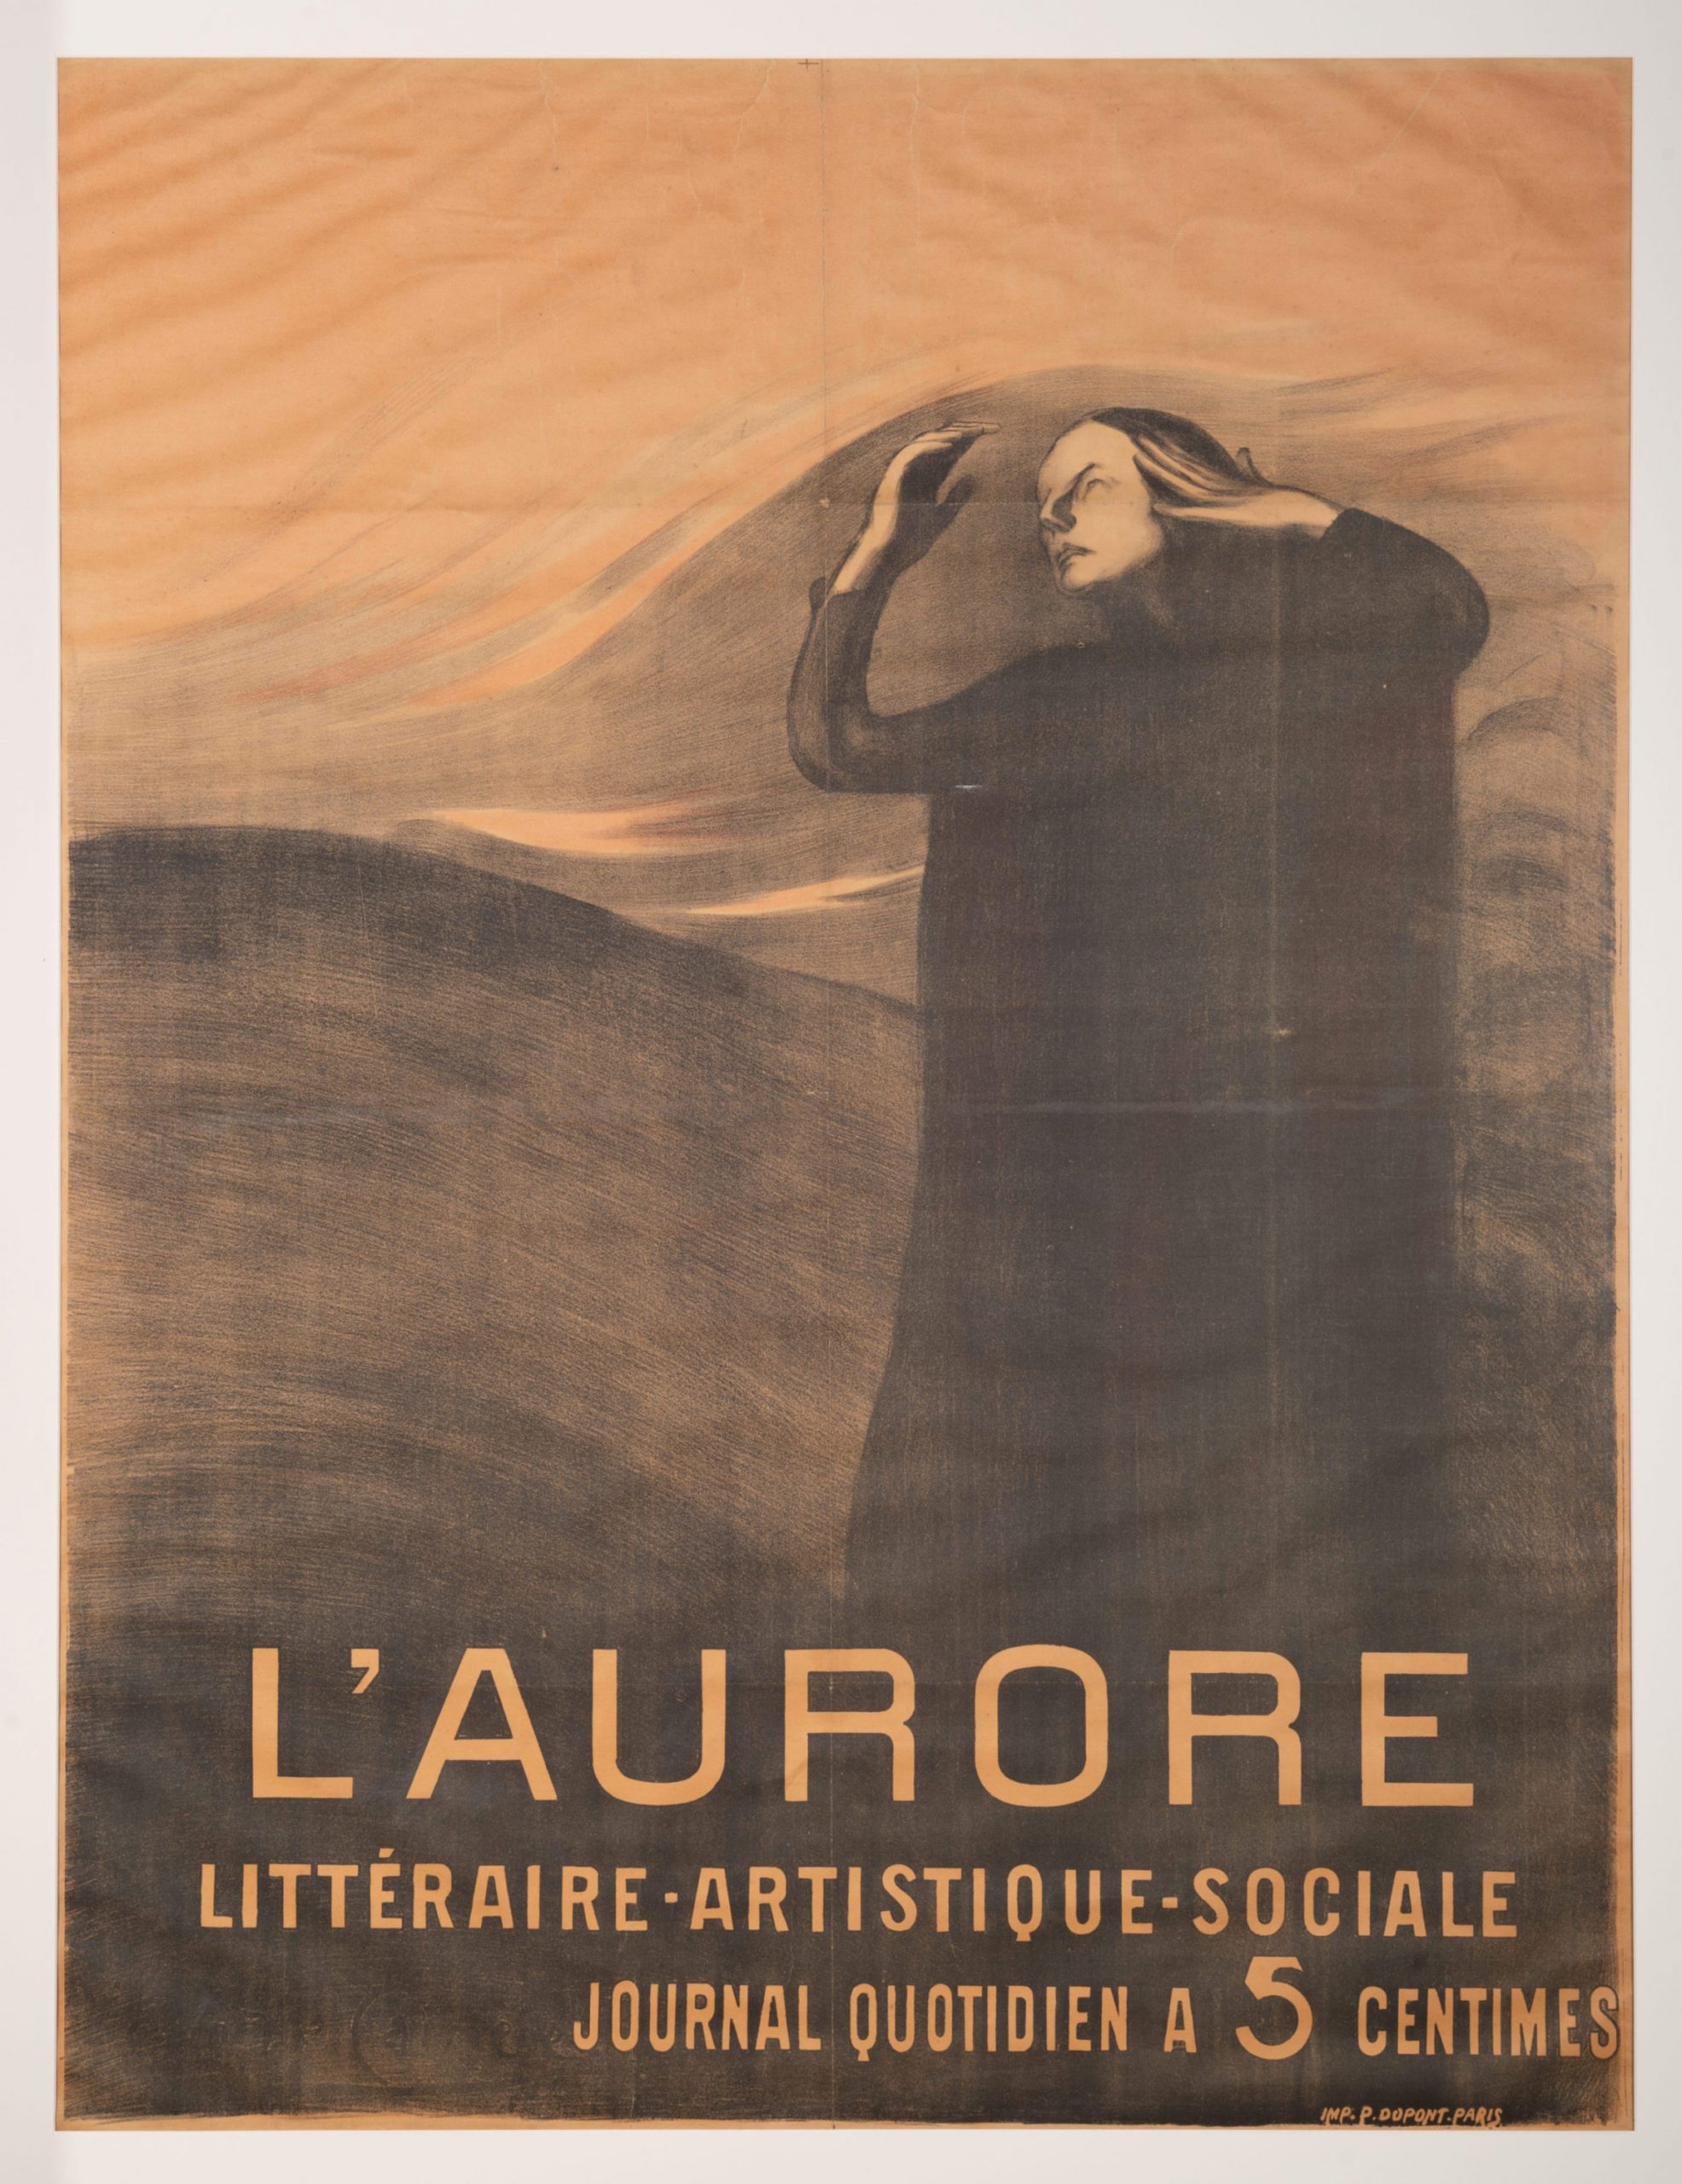 Cover of a L'Aurore newspaper, a liberal socialist newspaper published in Paris